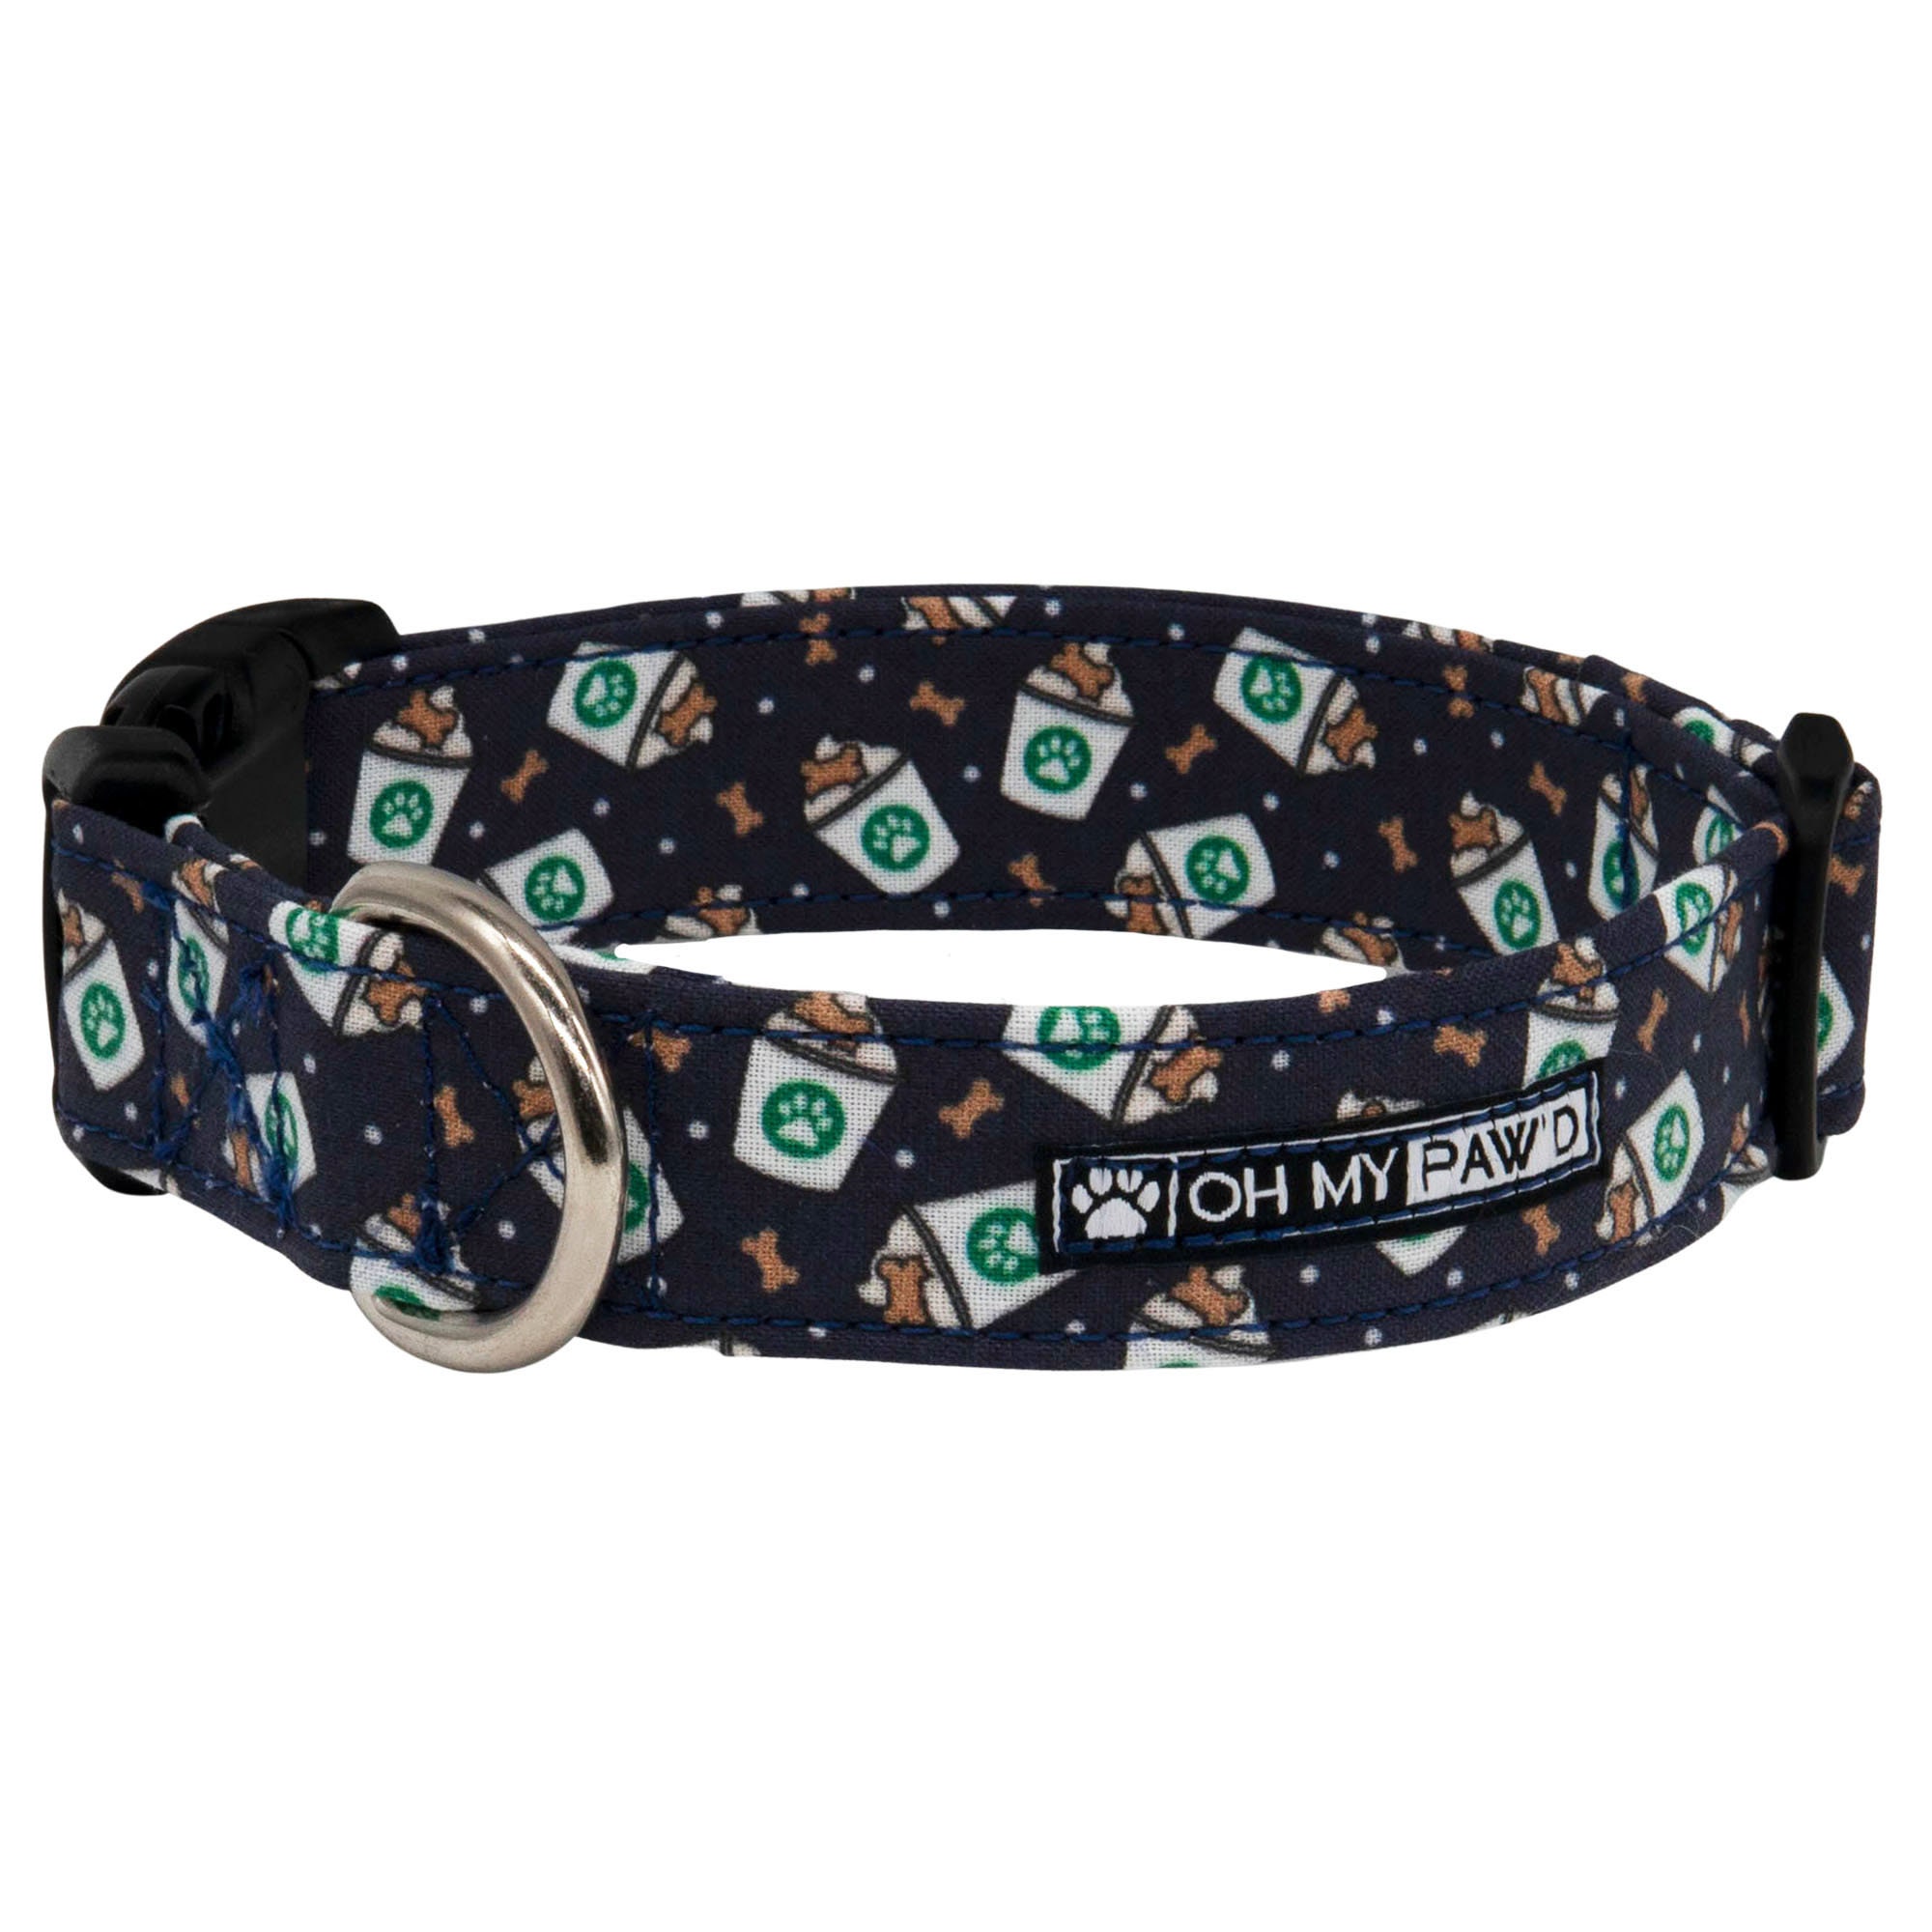 Cute designer dog collars custom green Peacock dog collar – Loyal Collars